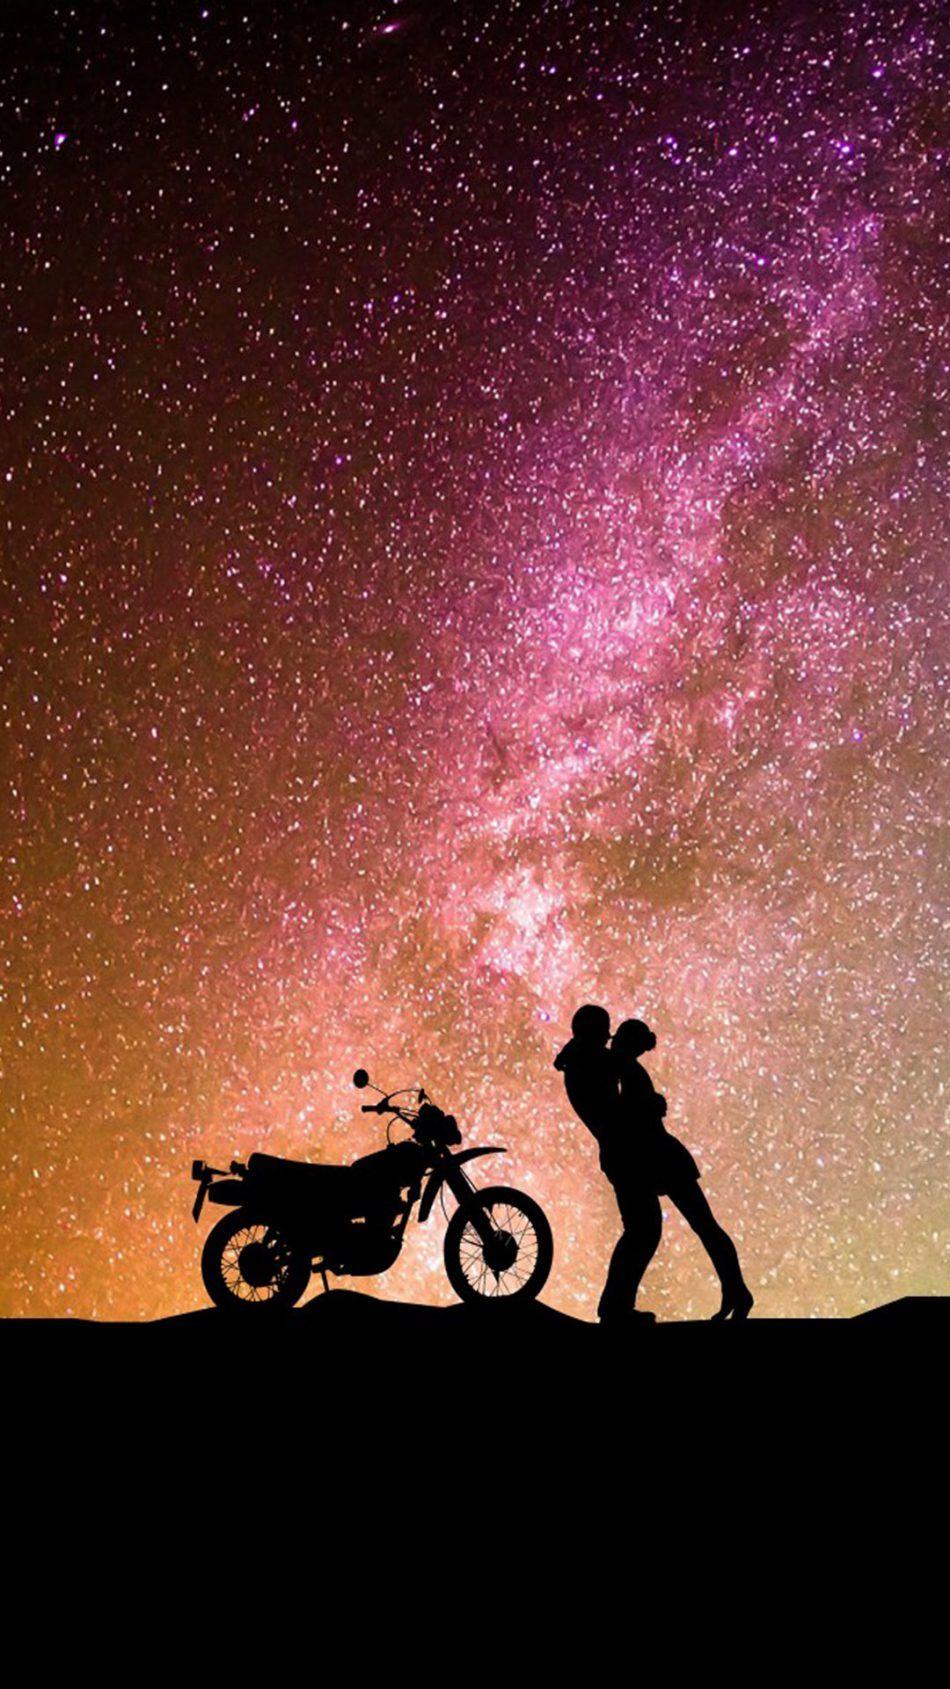 Couple Romantic Kiss Motorcycle 4K Ultra HD Mobile Wallpaper. Love couple wallpaper, Couple wallpaper, Romantic kiss